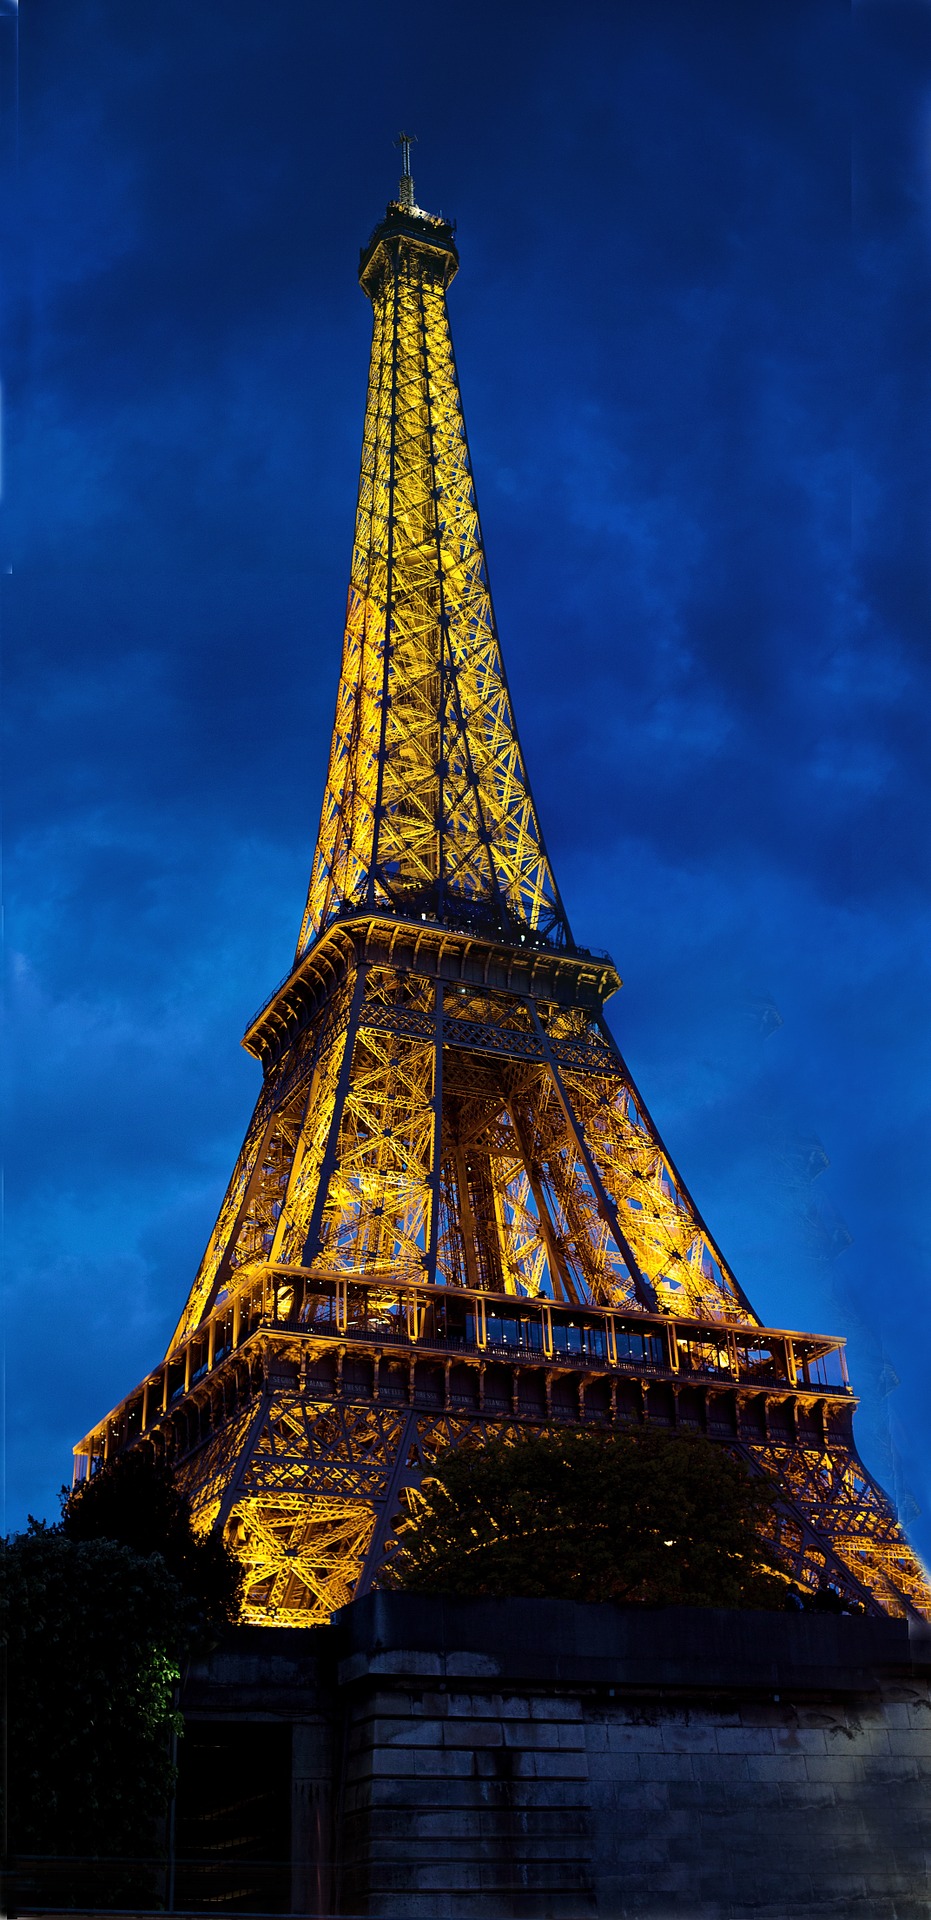 Eiffel tower at night photo